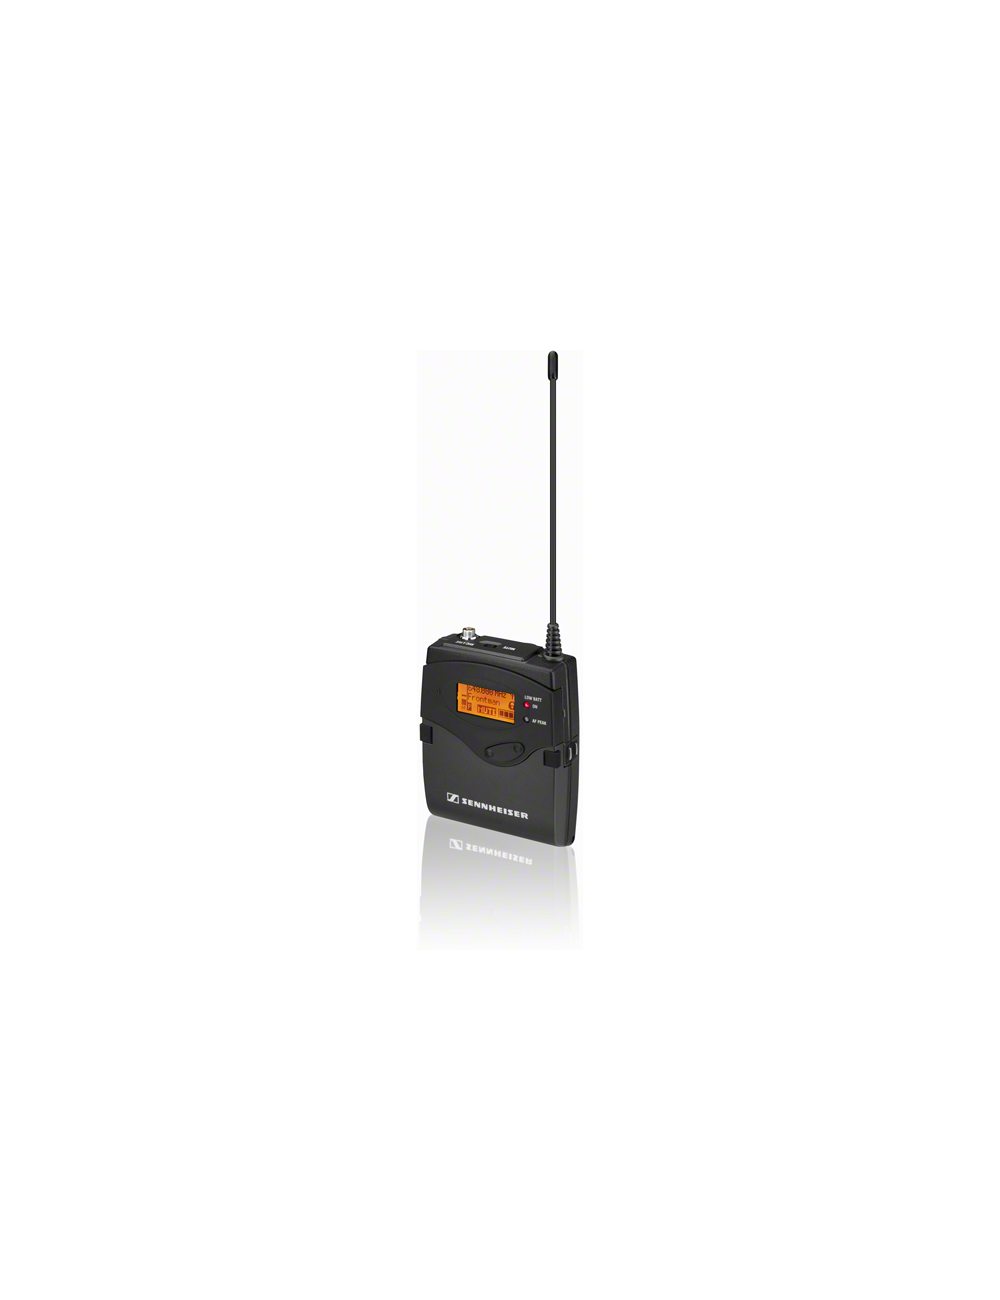 UHF SK2000 pocket transmitter